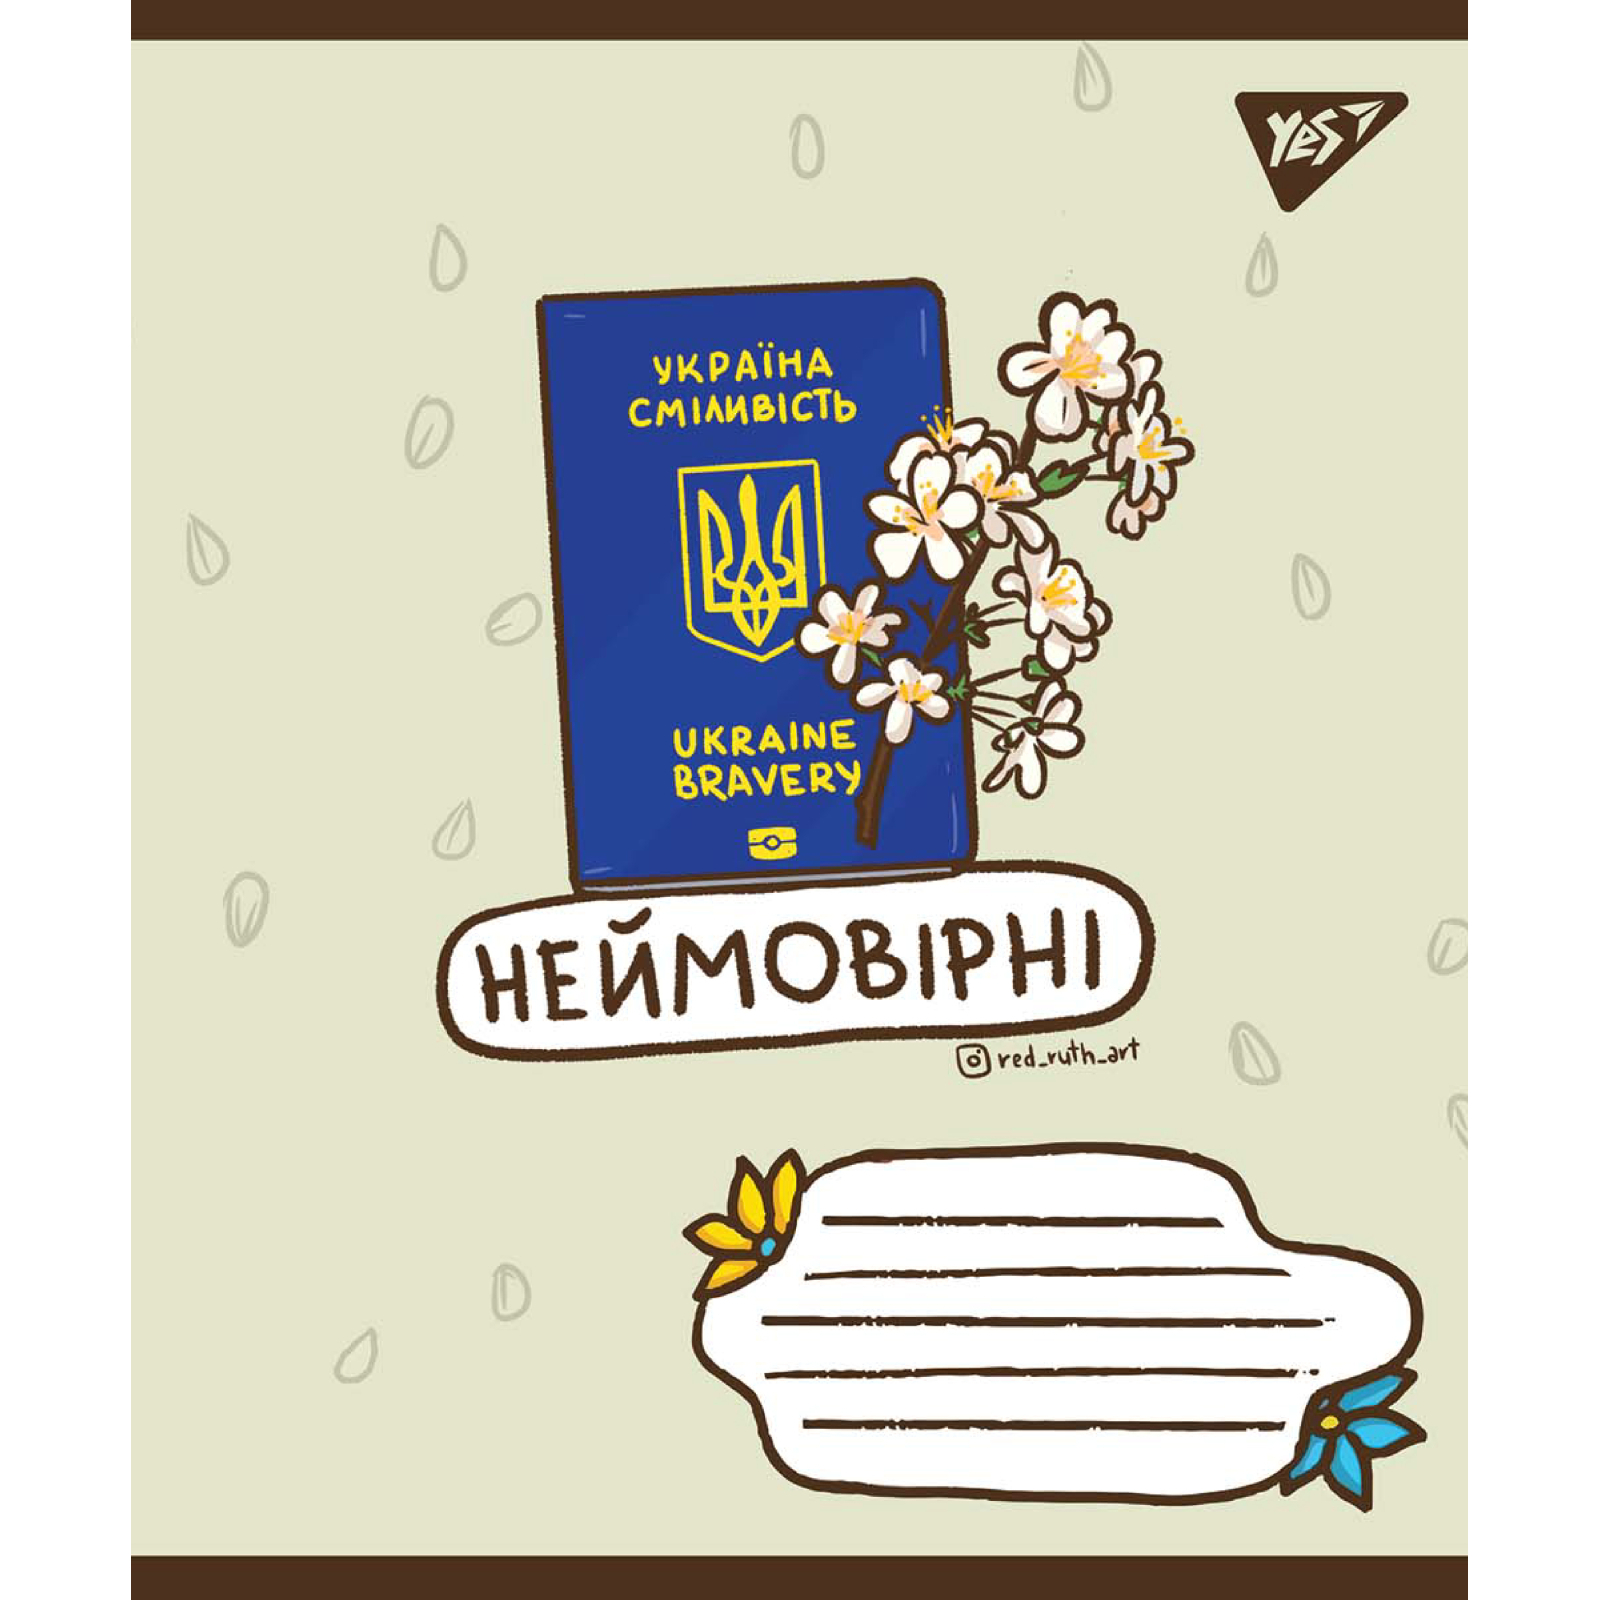 Тетрадь Yes А5 Ukraine bravery 96 листов, линия (766254) изображение 4